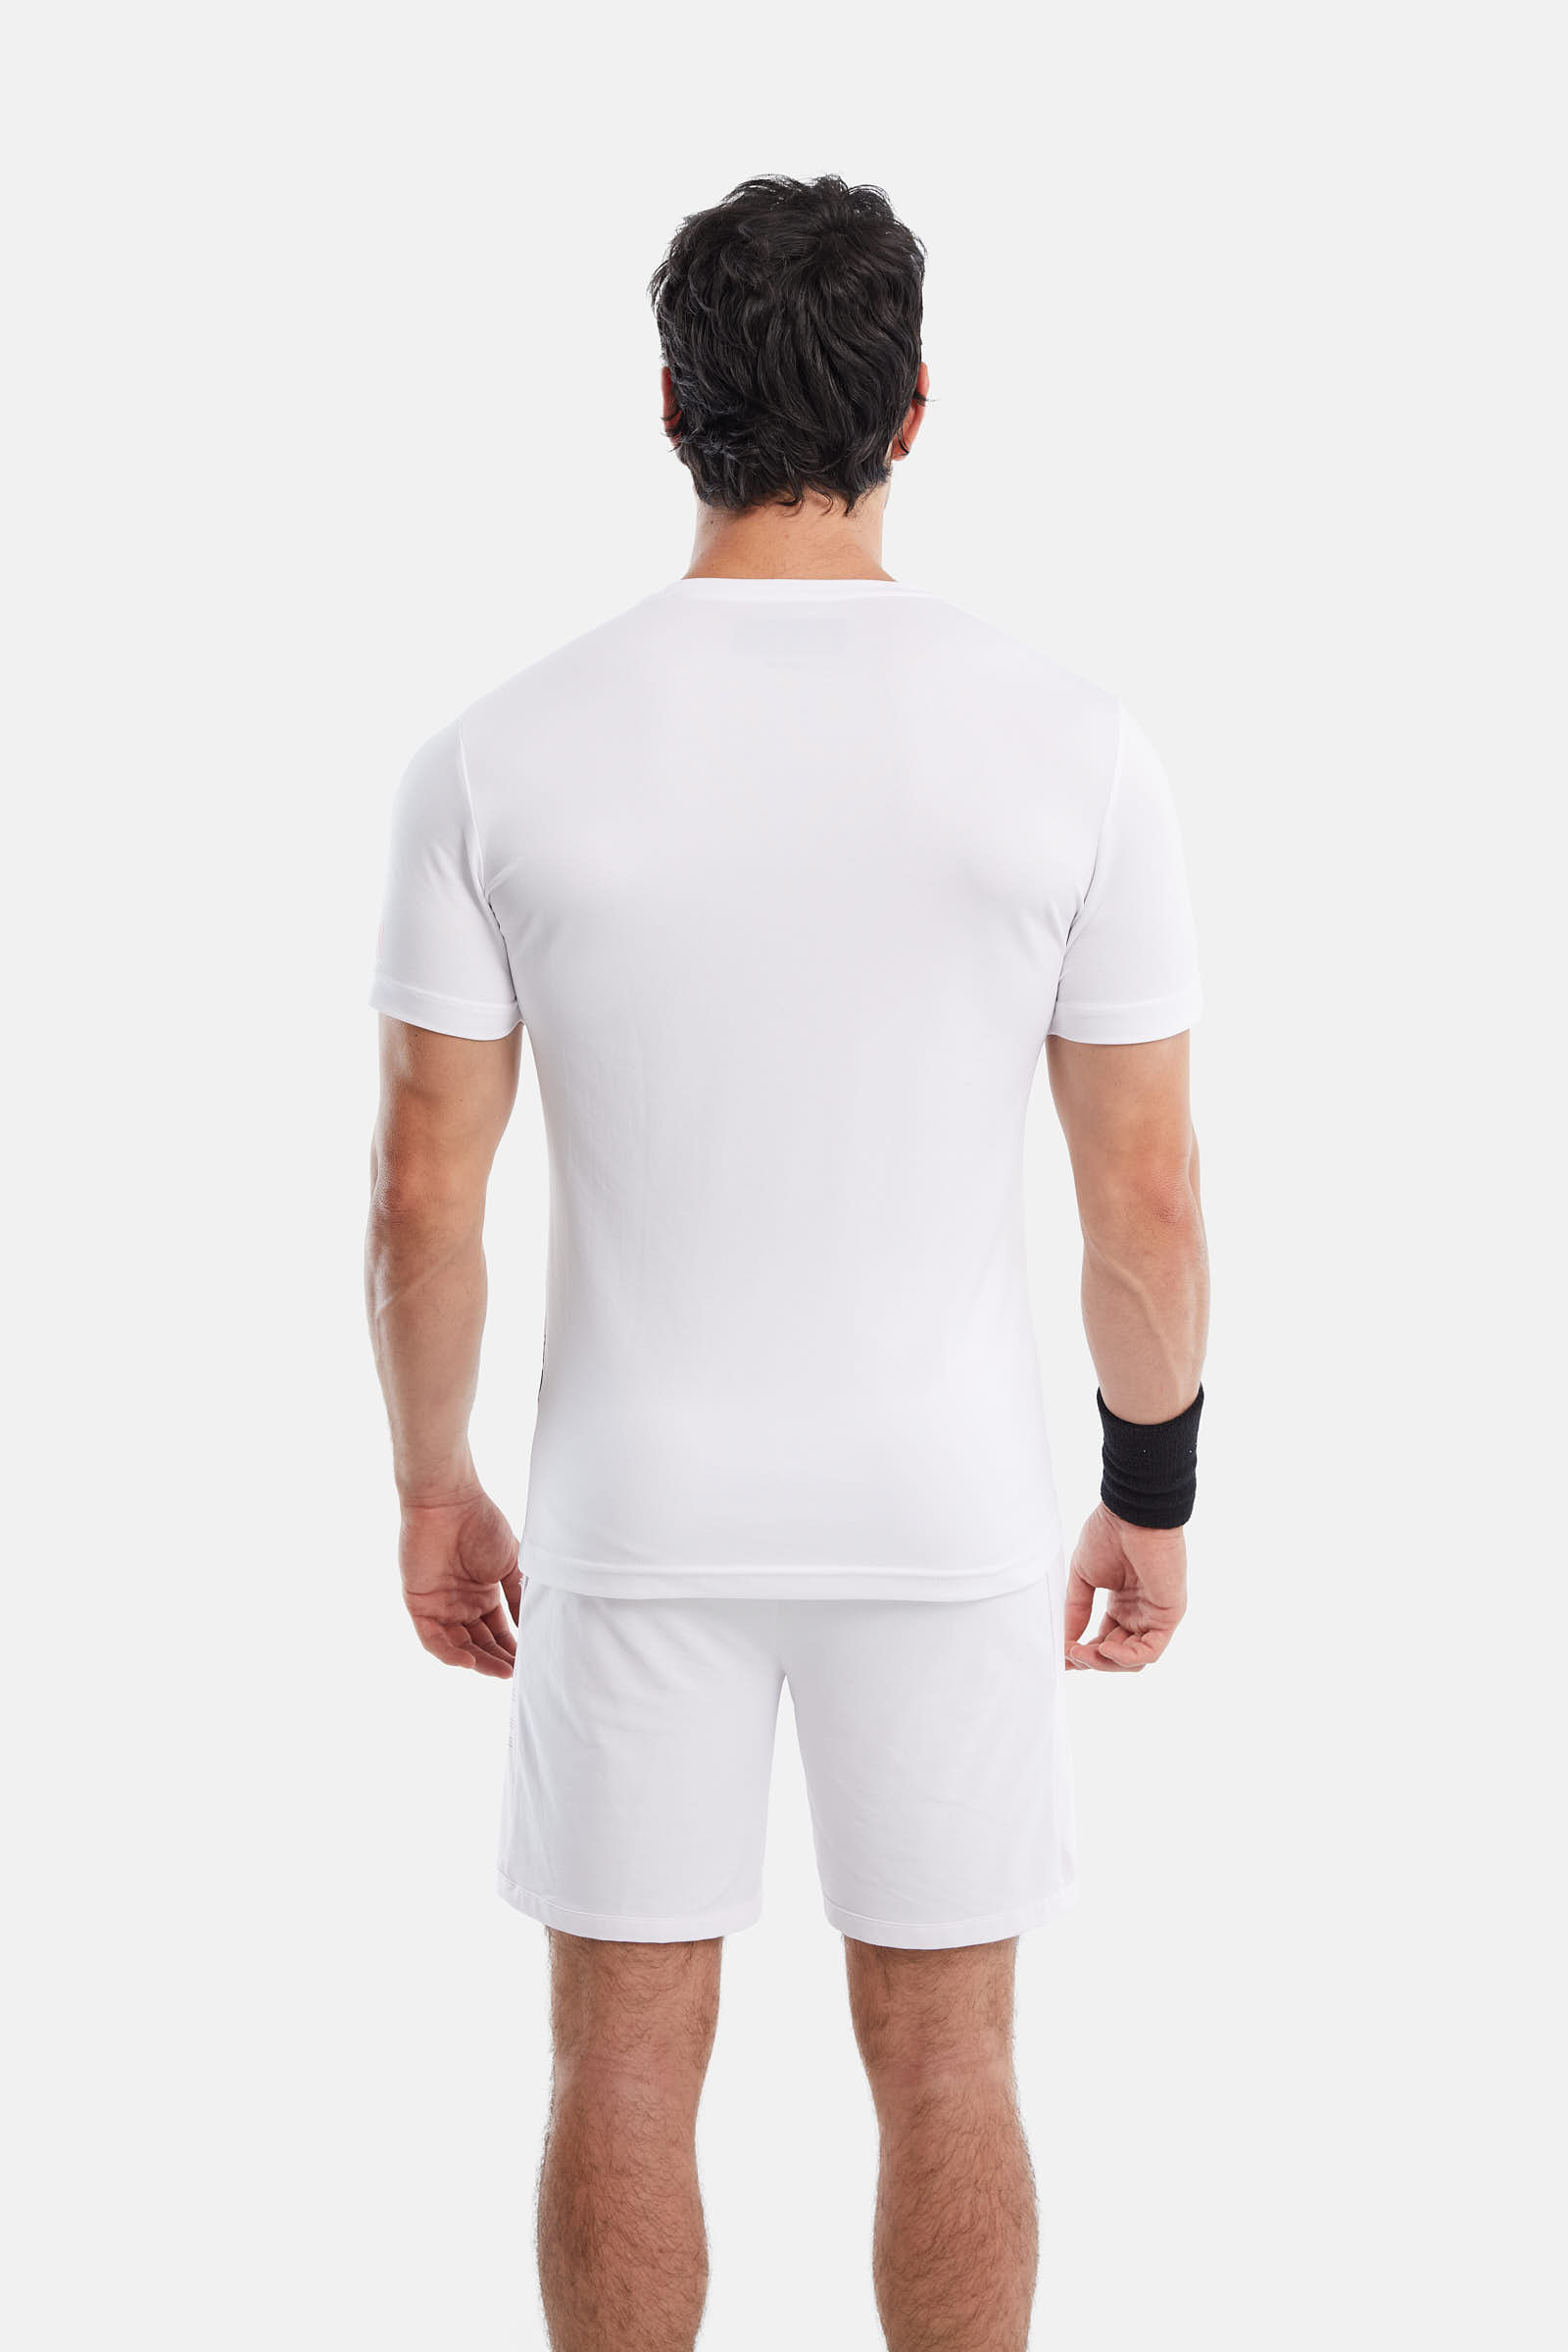 T-SHIRT SMANICATA BRUSH - WHITE - Abbigliamento sportivo | Hydrogen